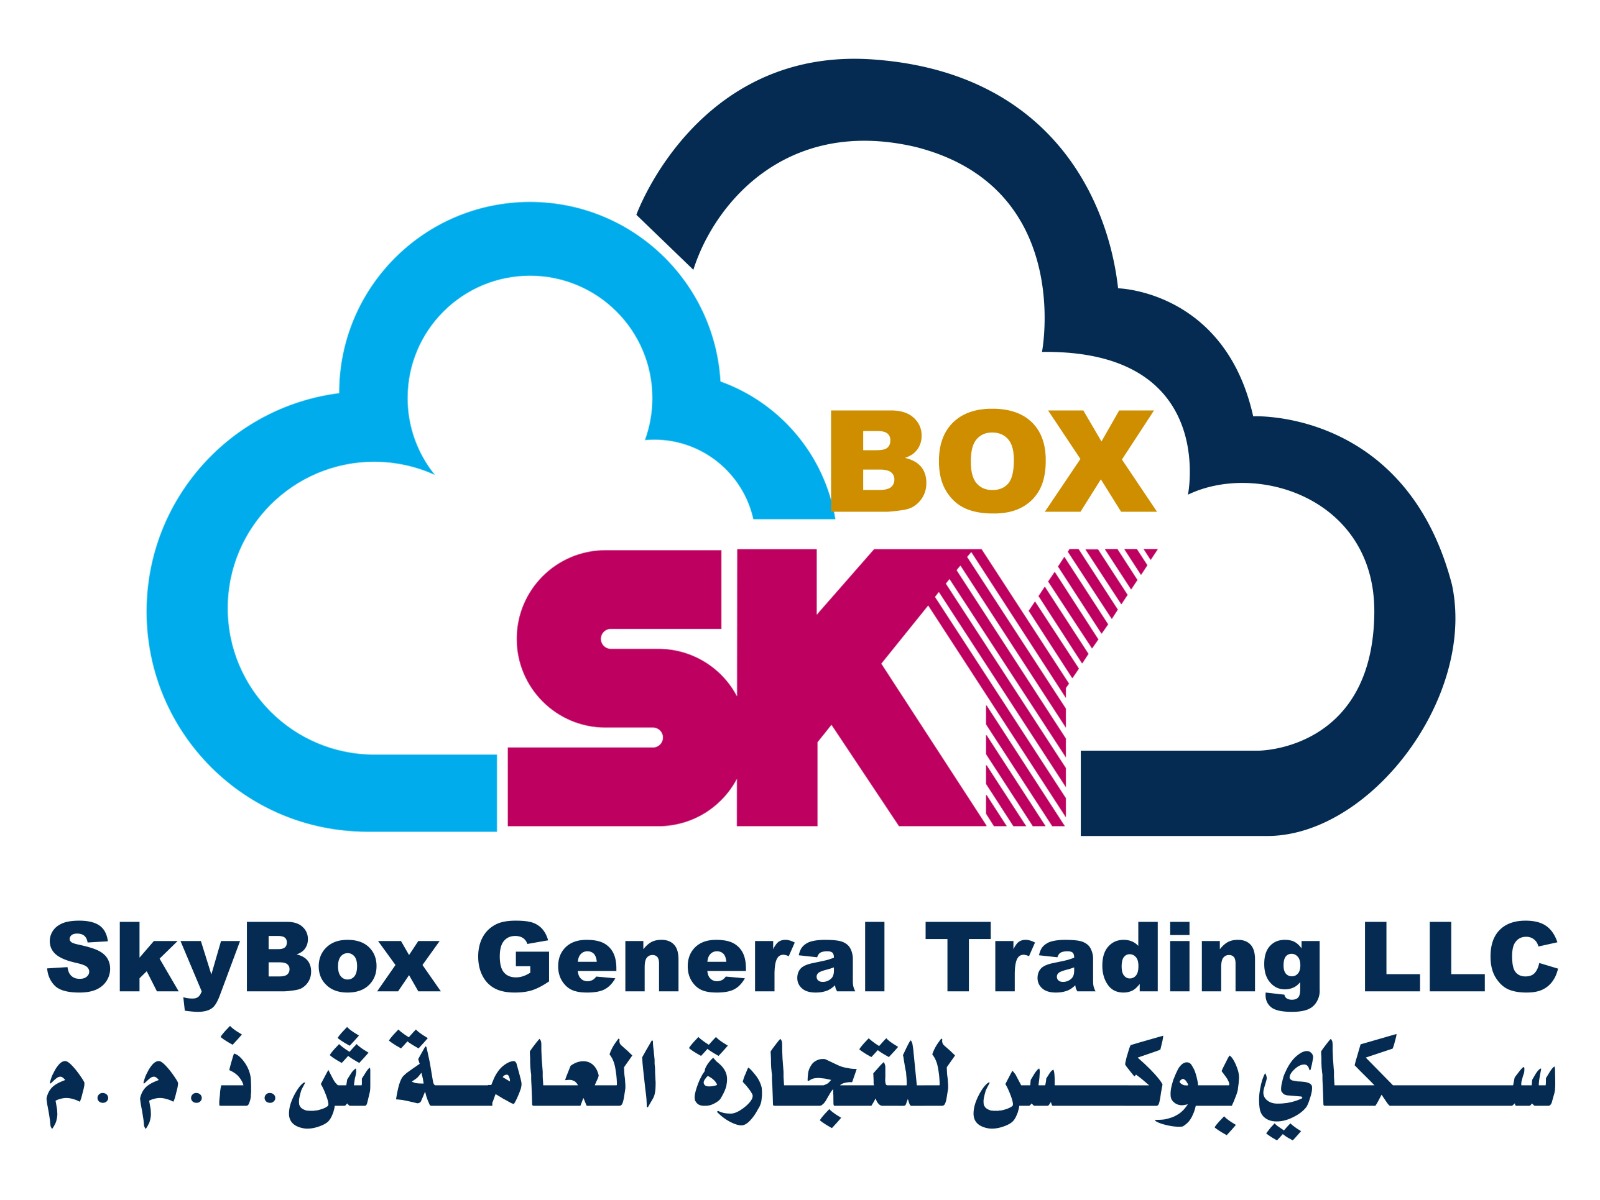 Sky Box General Trading LLC